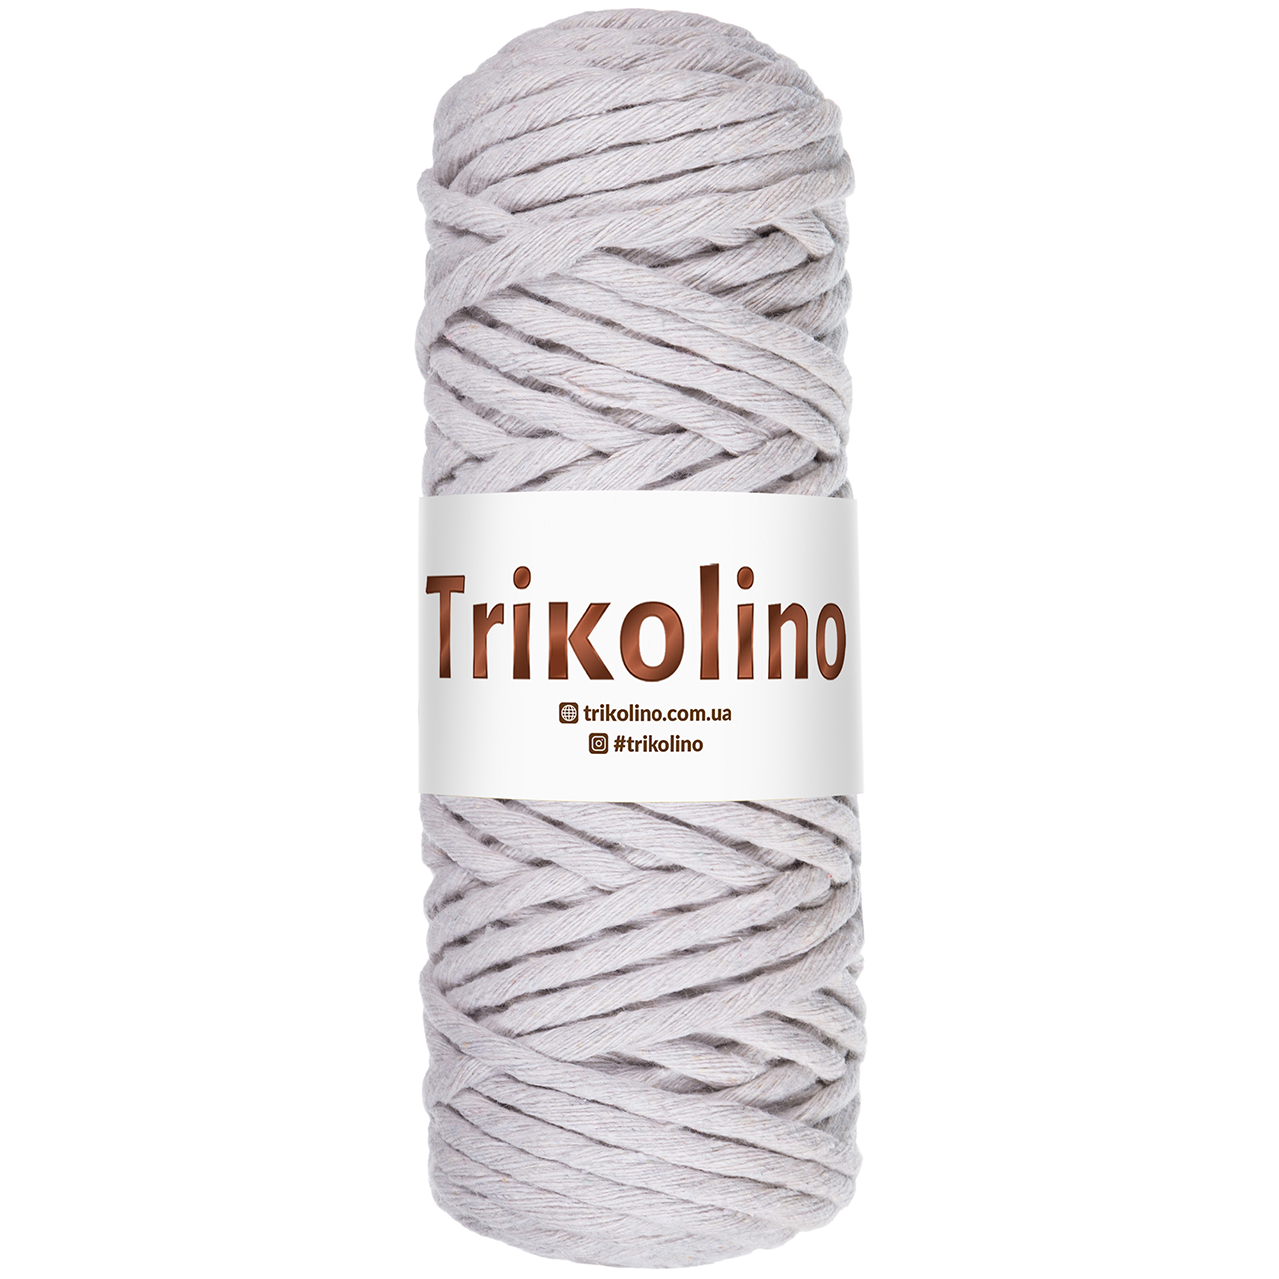 Шнур для макраме Trikolino Светлый серый 4-6мм